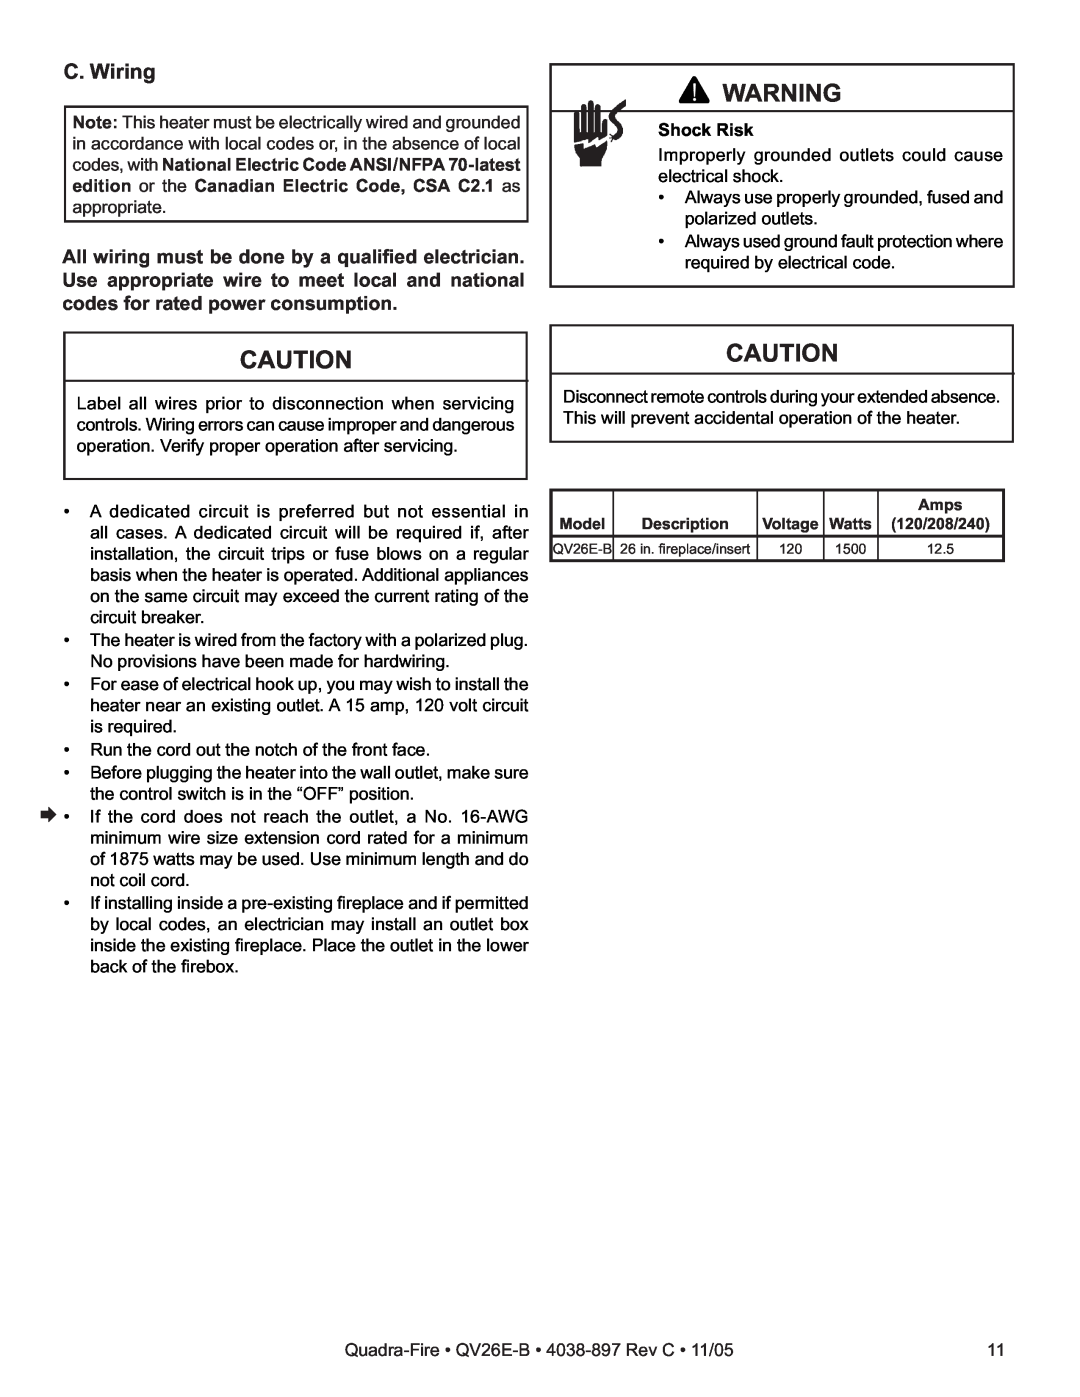 Quadra-Fire QV26E-B owner manual C. Wiring, Shock Risk 